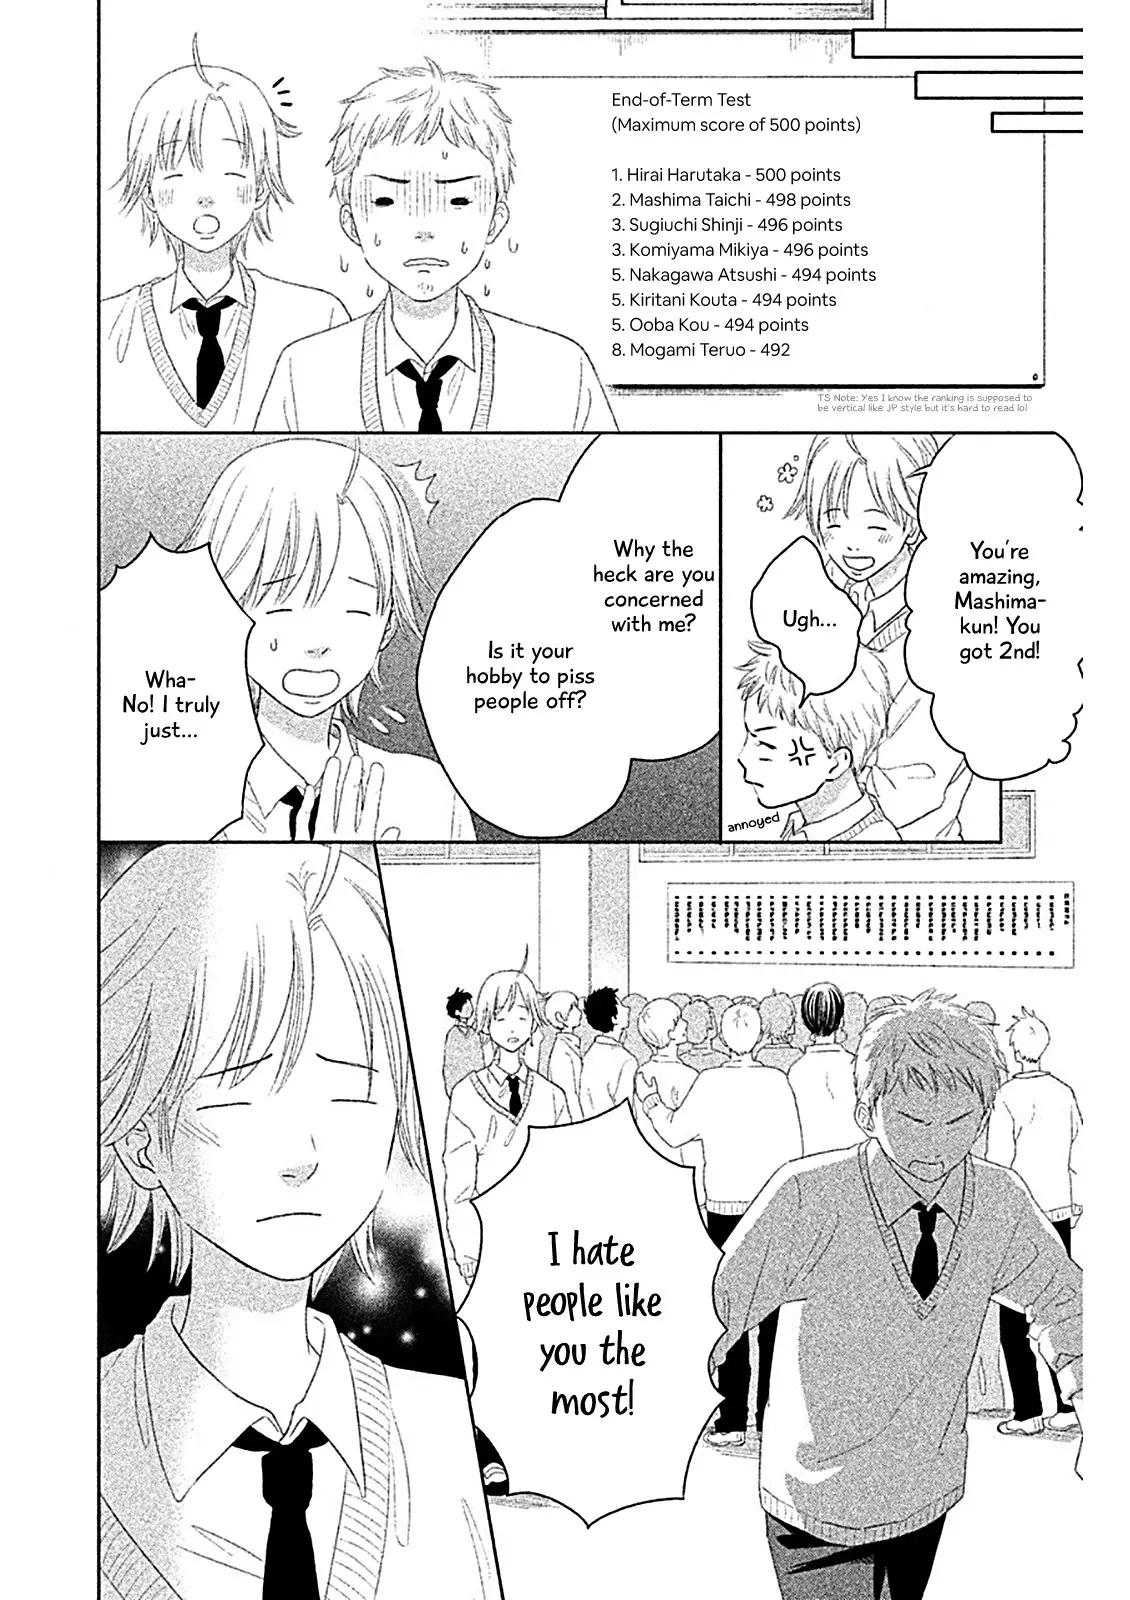 Chihayafuru: Middle School Arc - 4 page 7